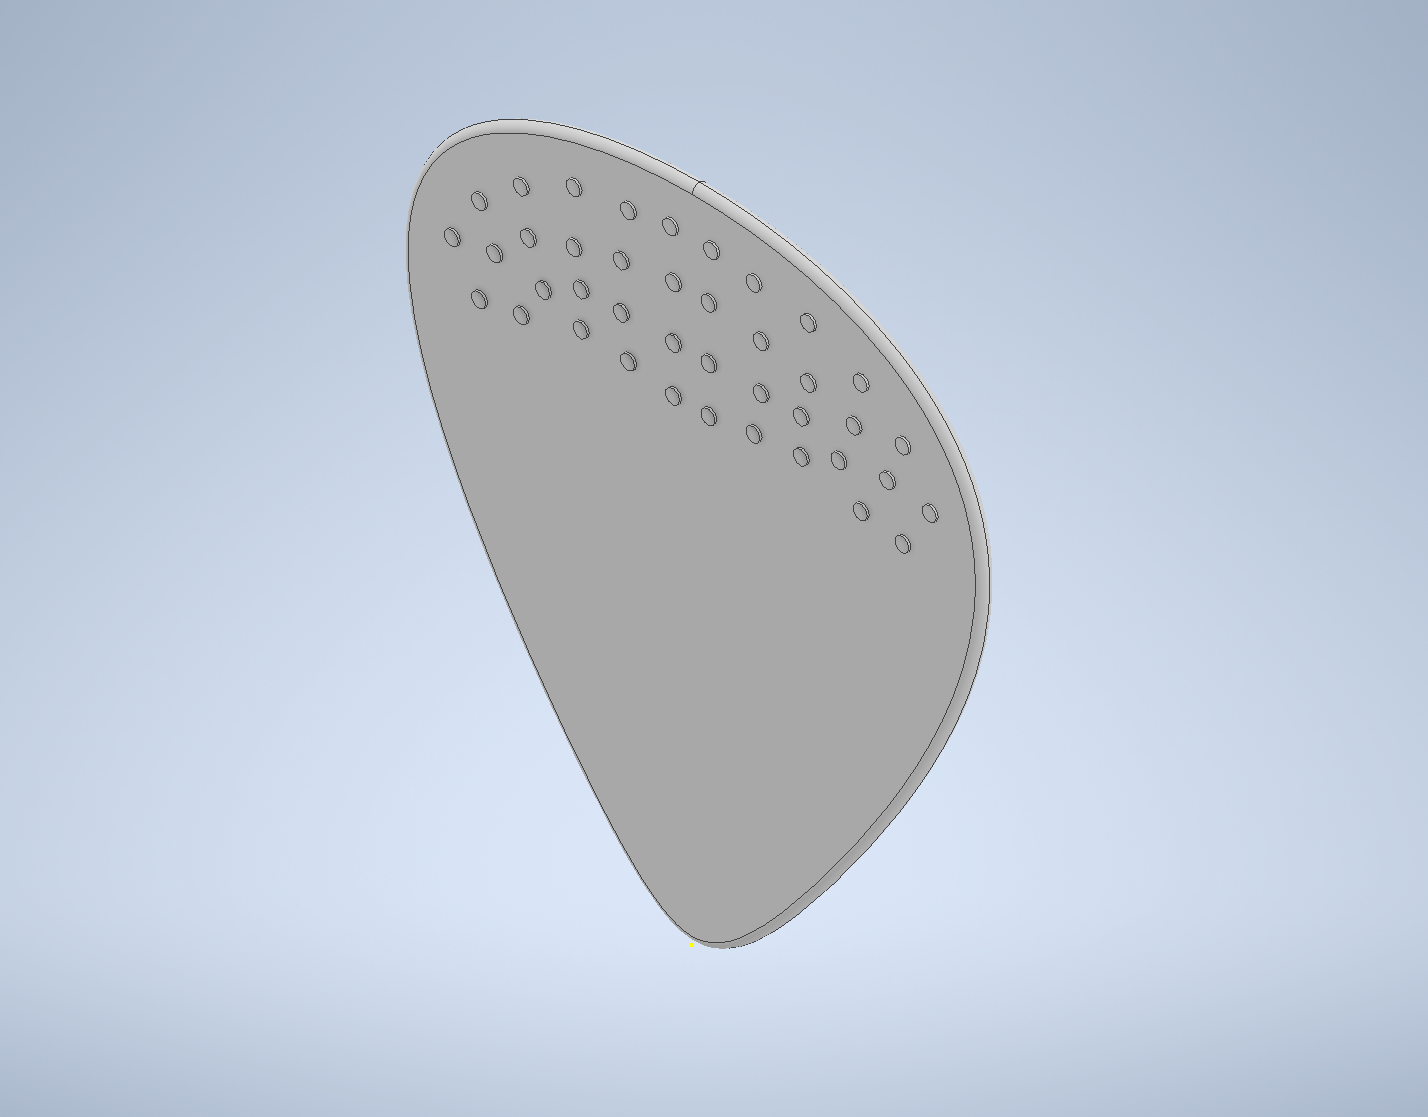 Autodesk Inventor 3D Printed Guitar Pick